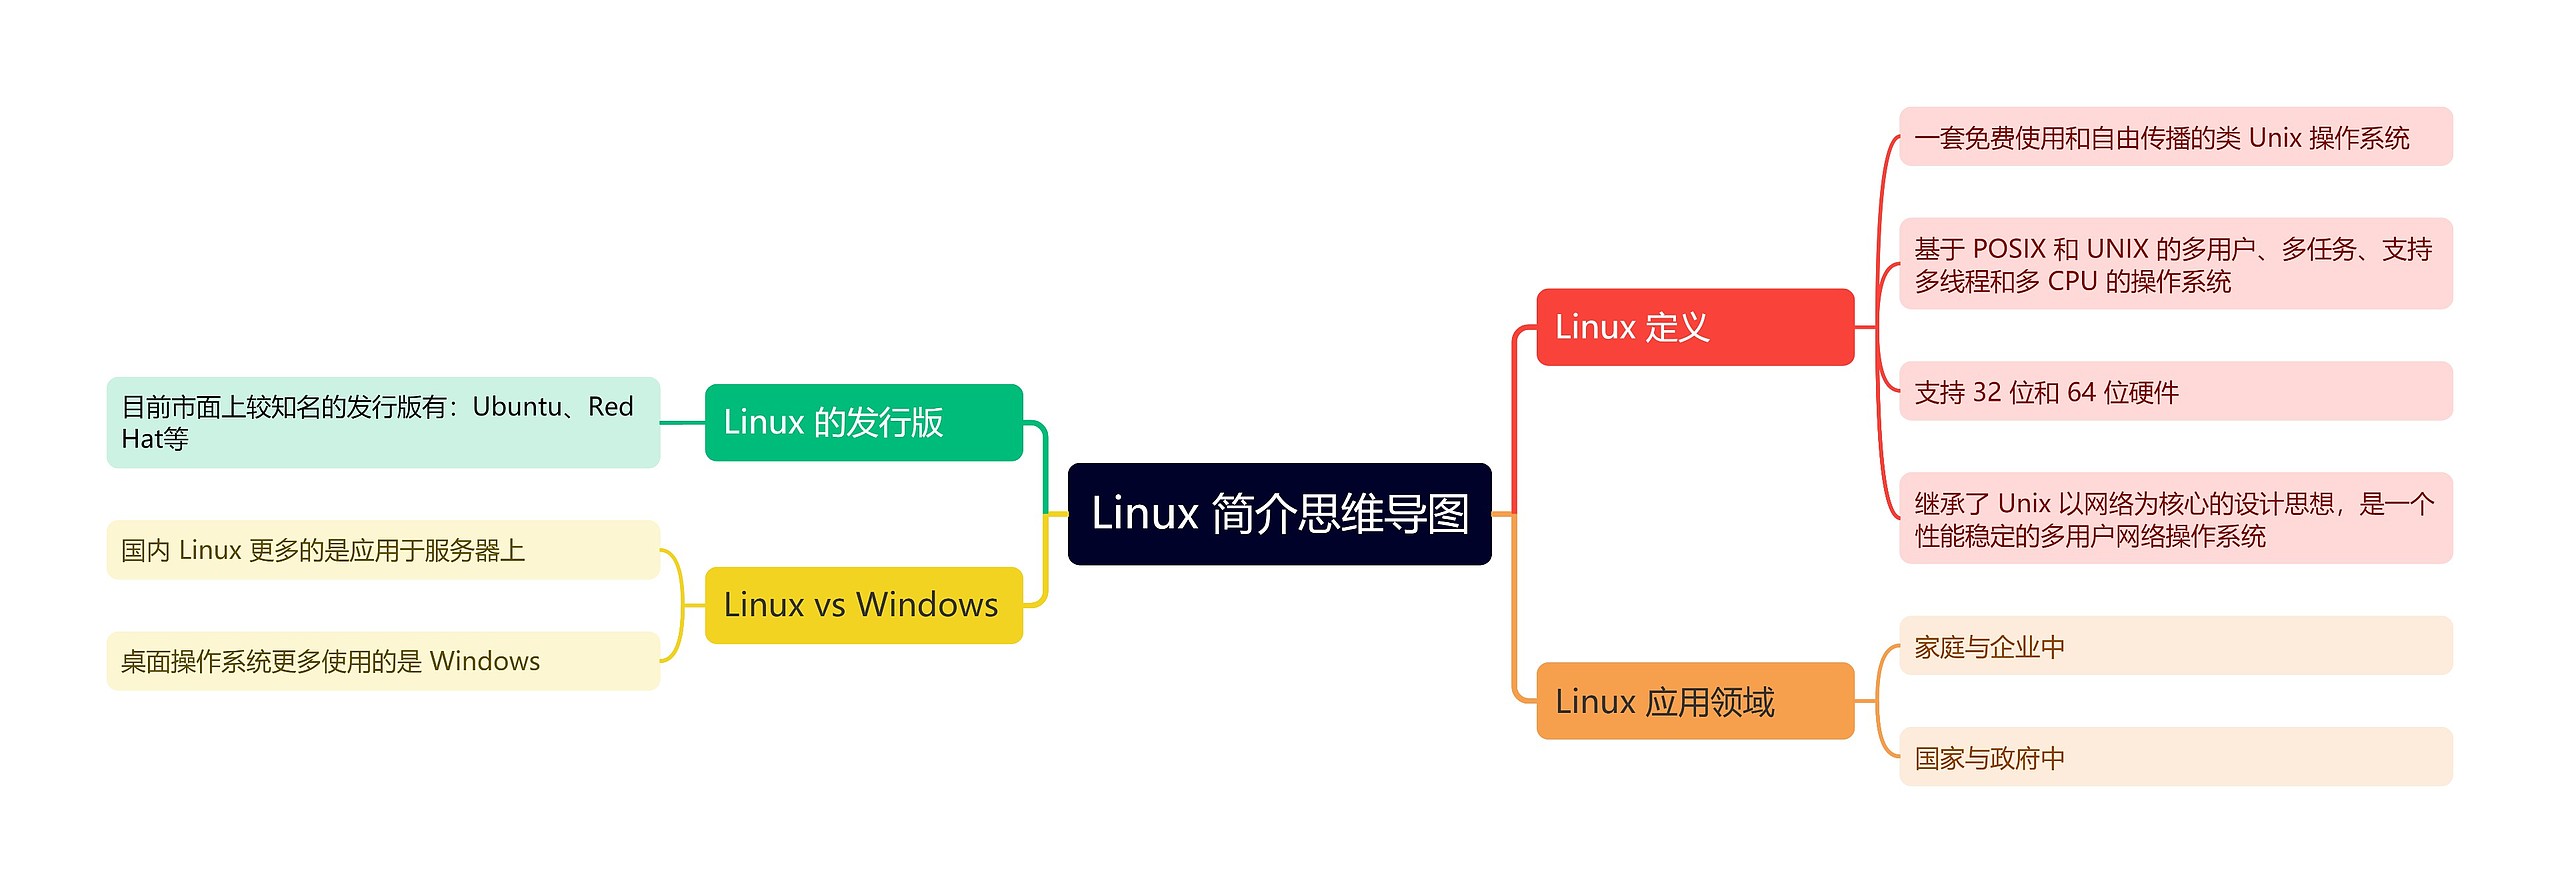 Linux 简介思维导图